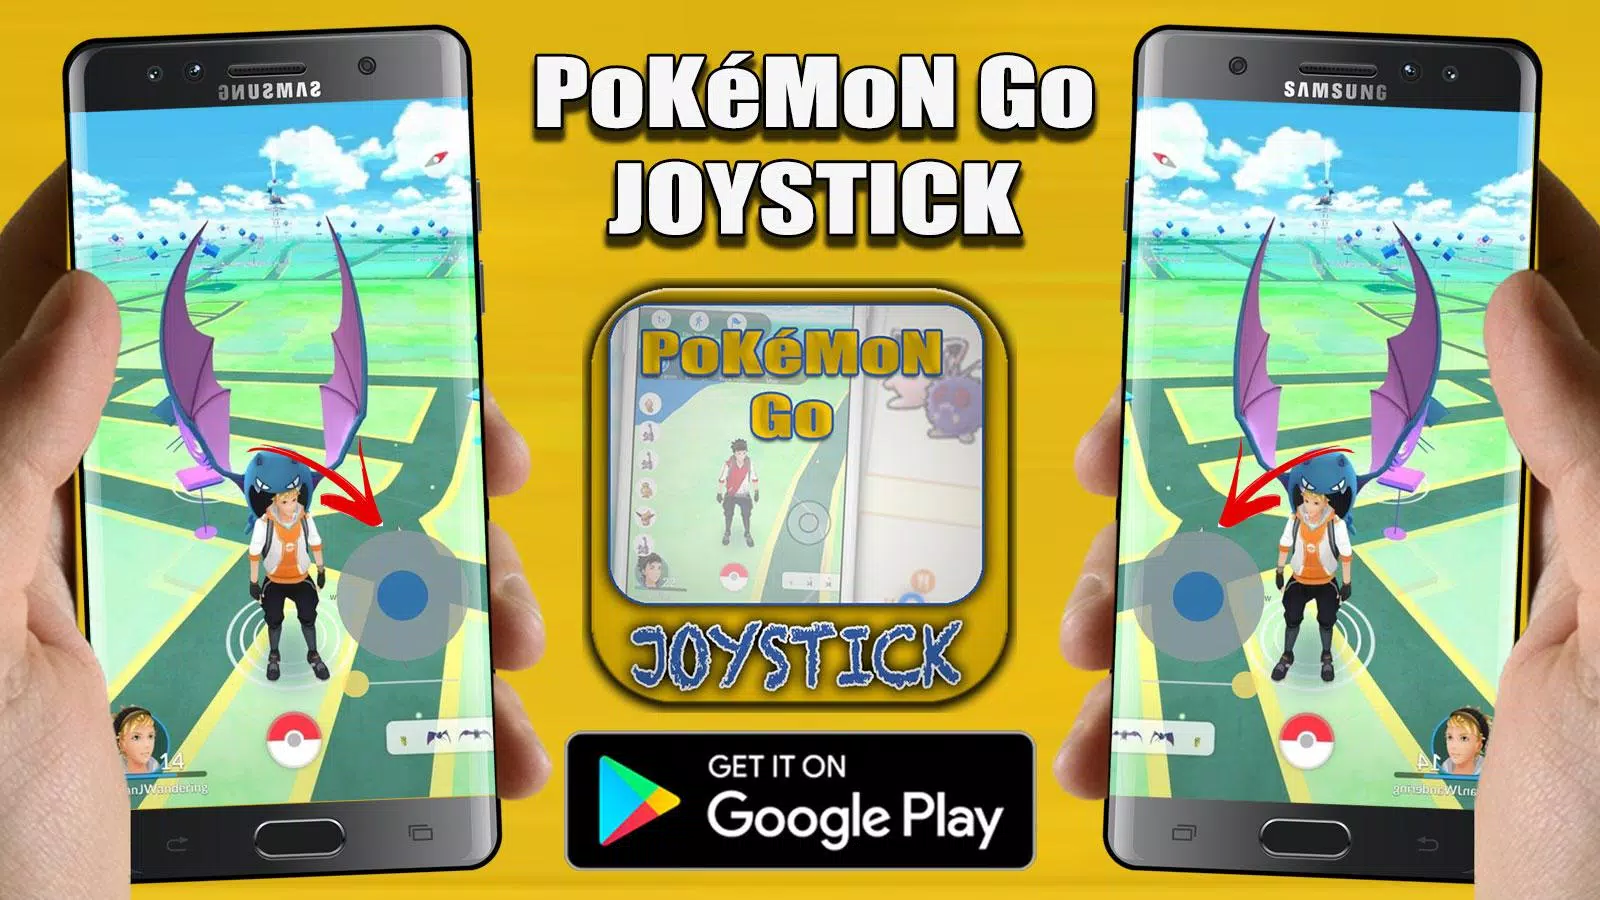 Get Joystick On Poke Go Fake GPS New Prank APK for Android Download